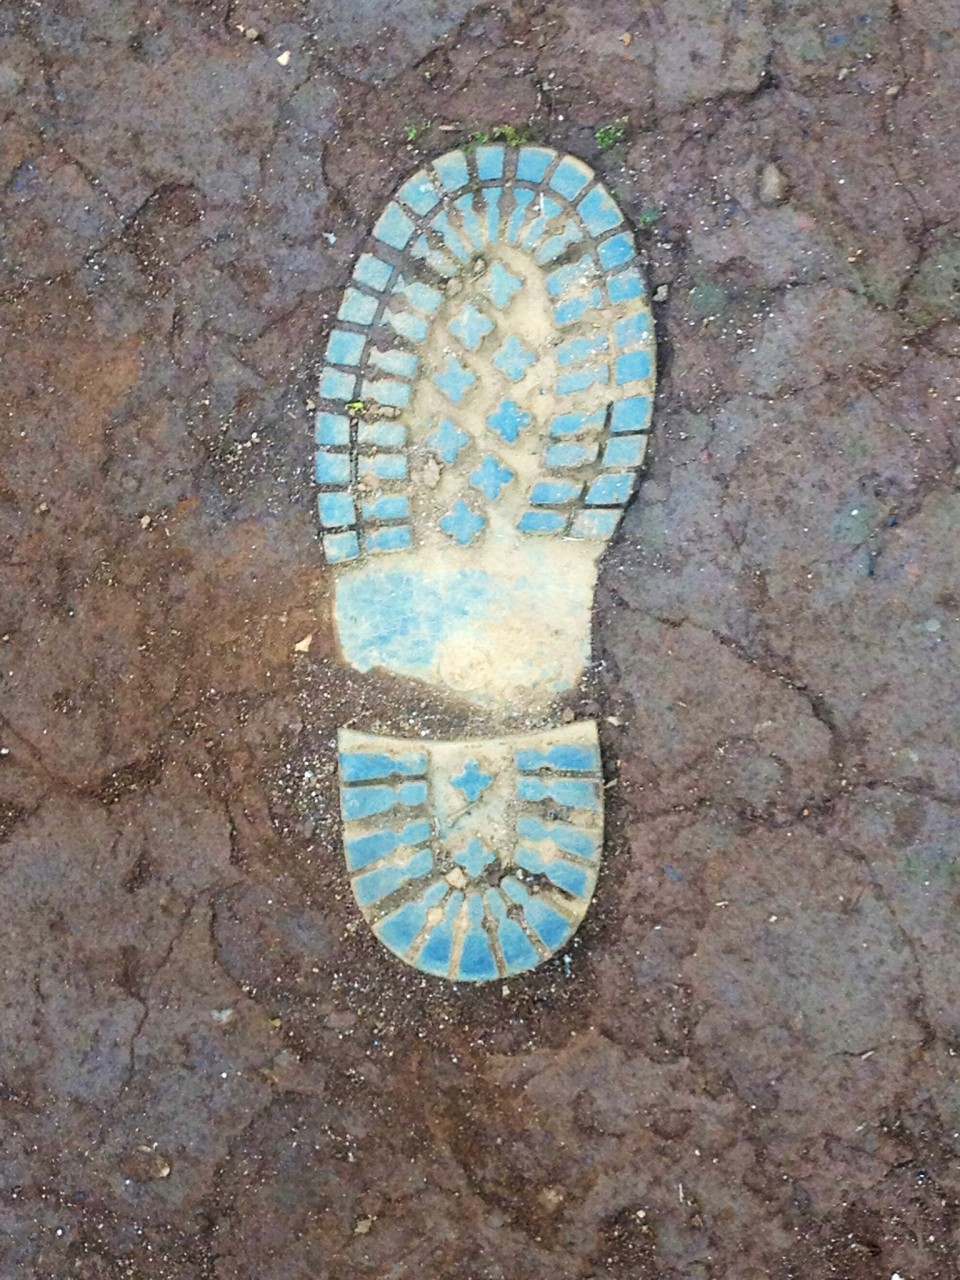 Footprint on the way to the summit of Kili